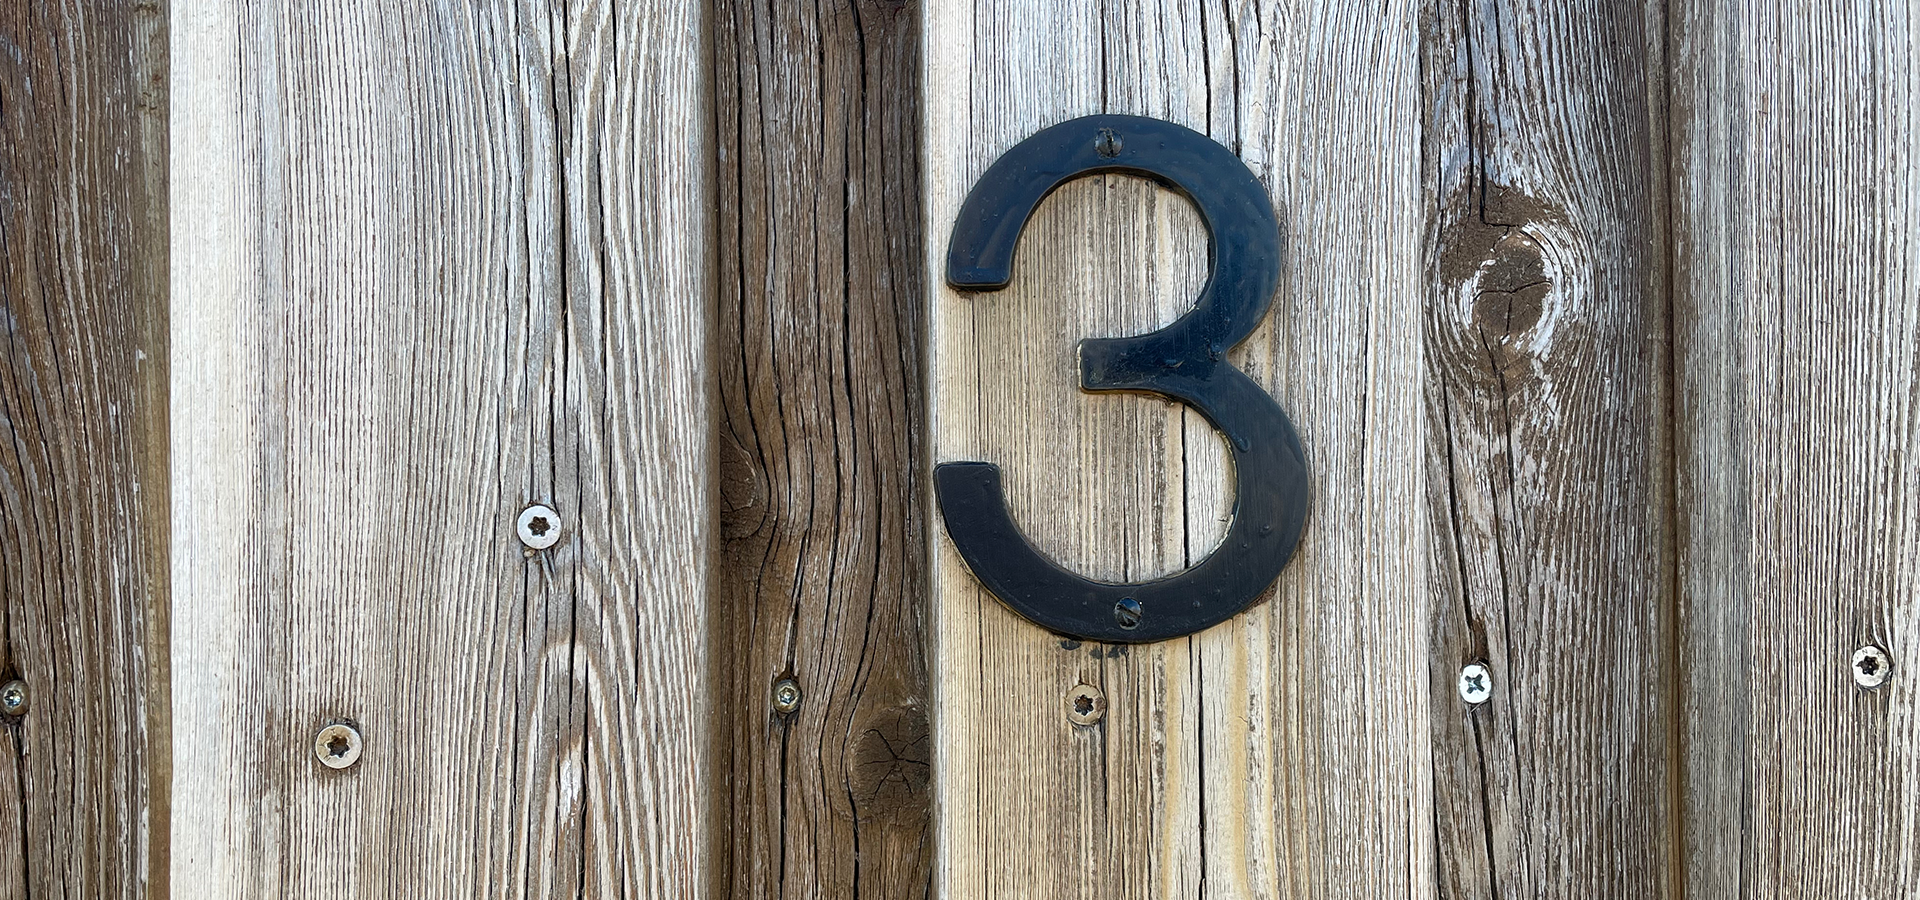 Numerologia | Número 3